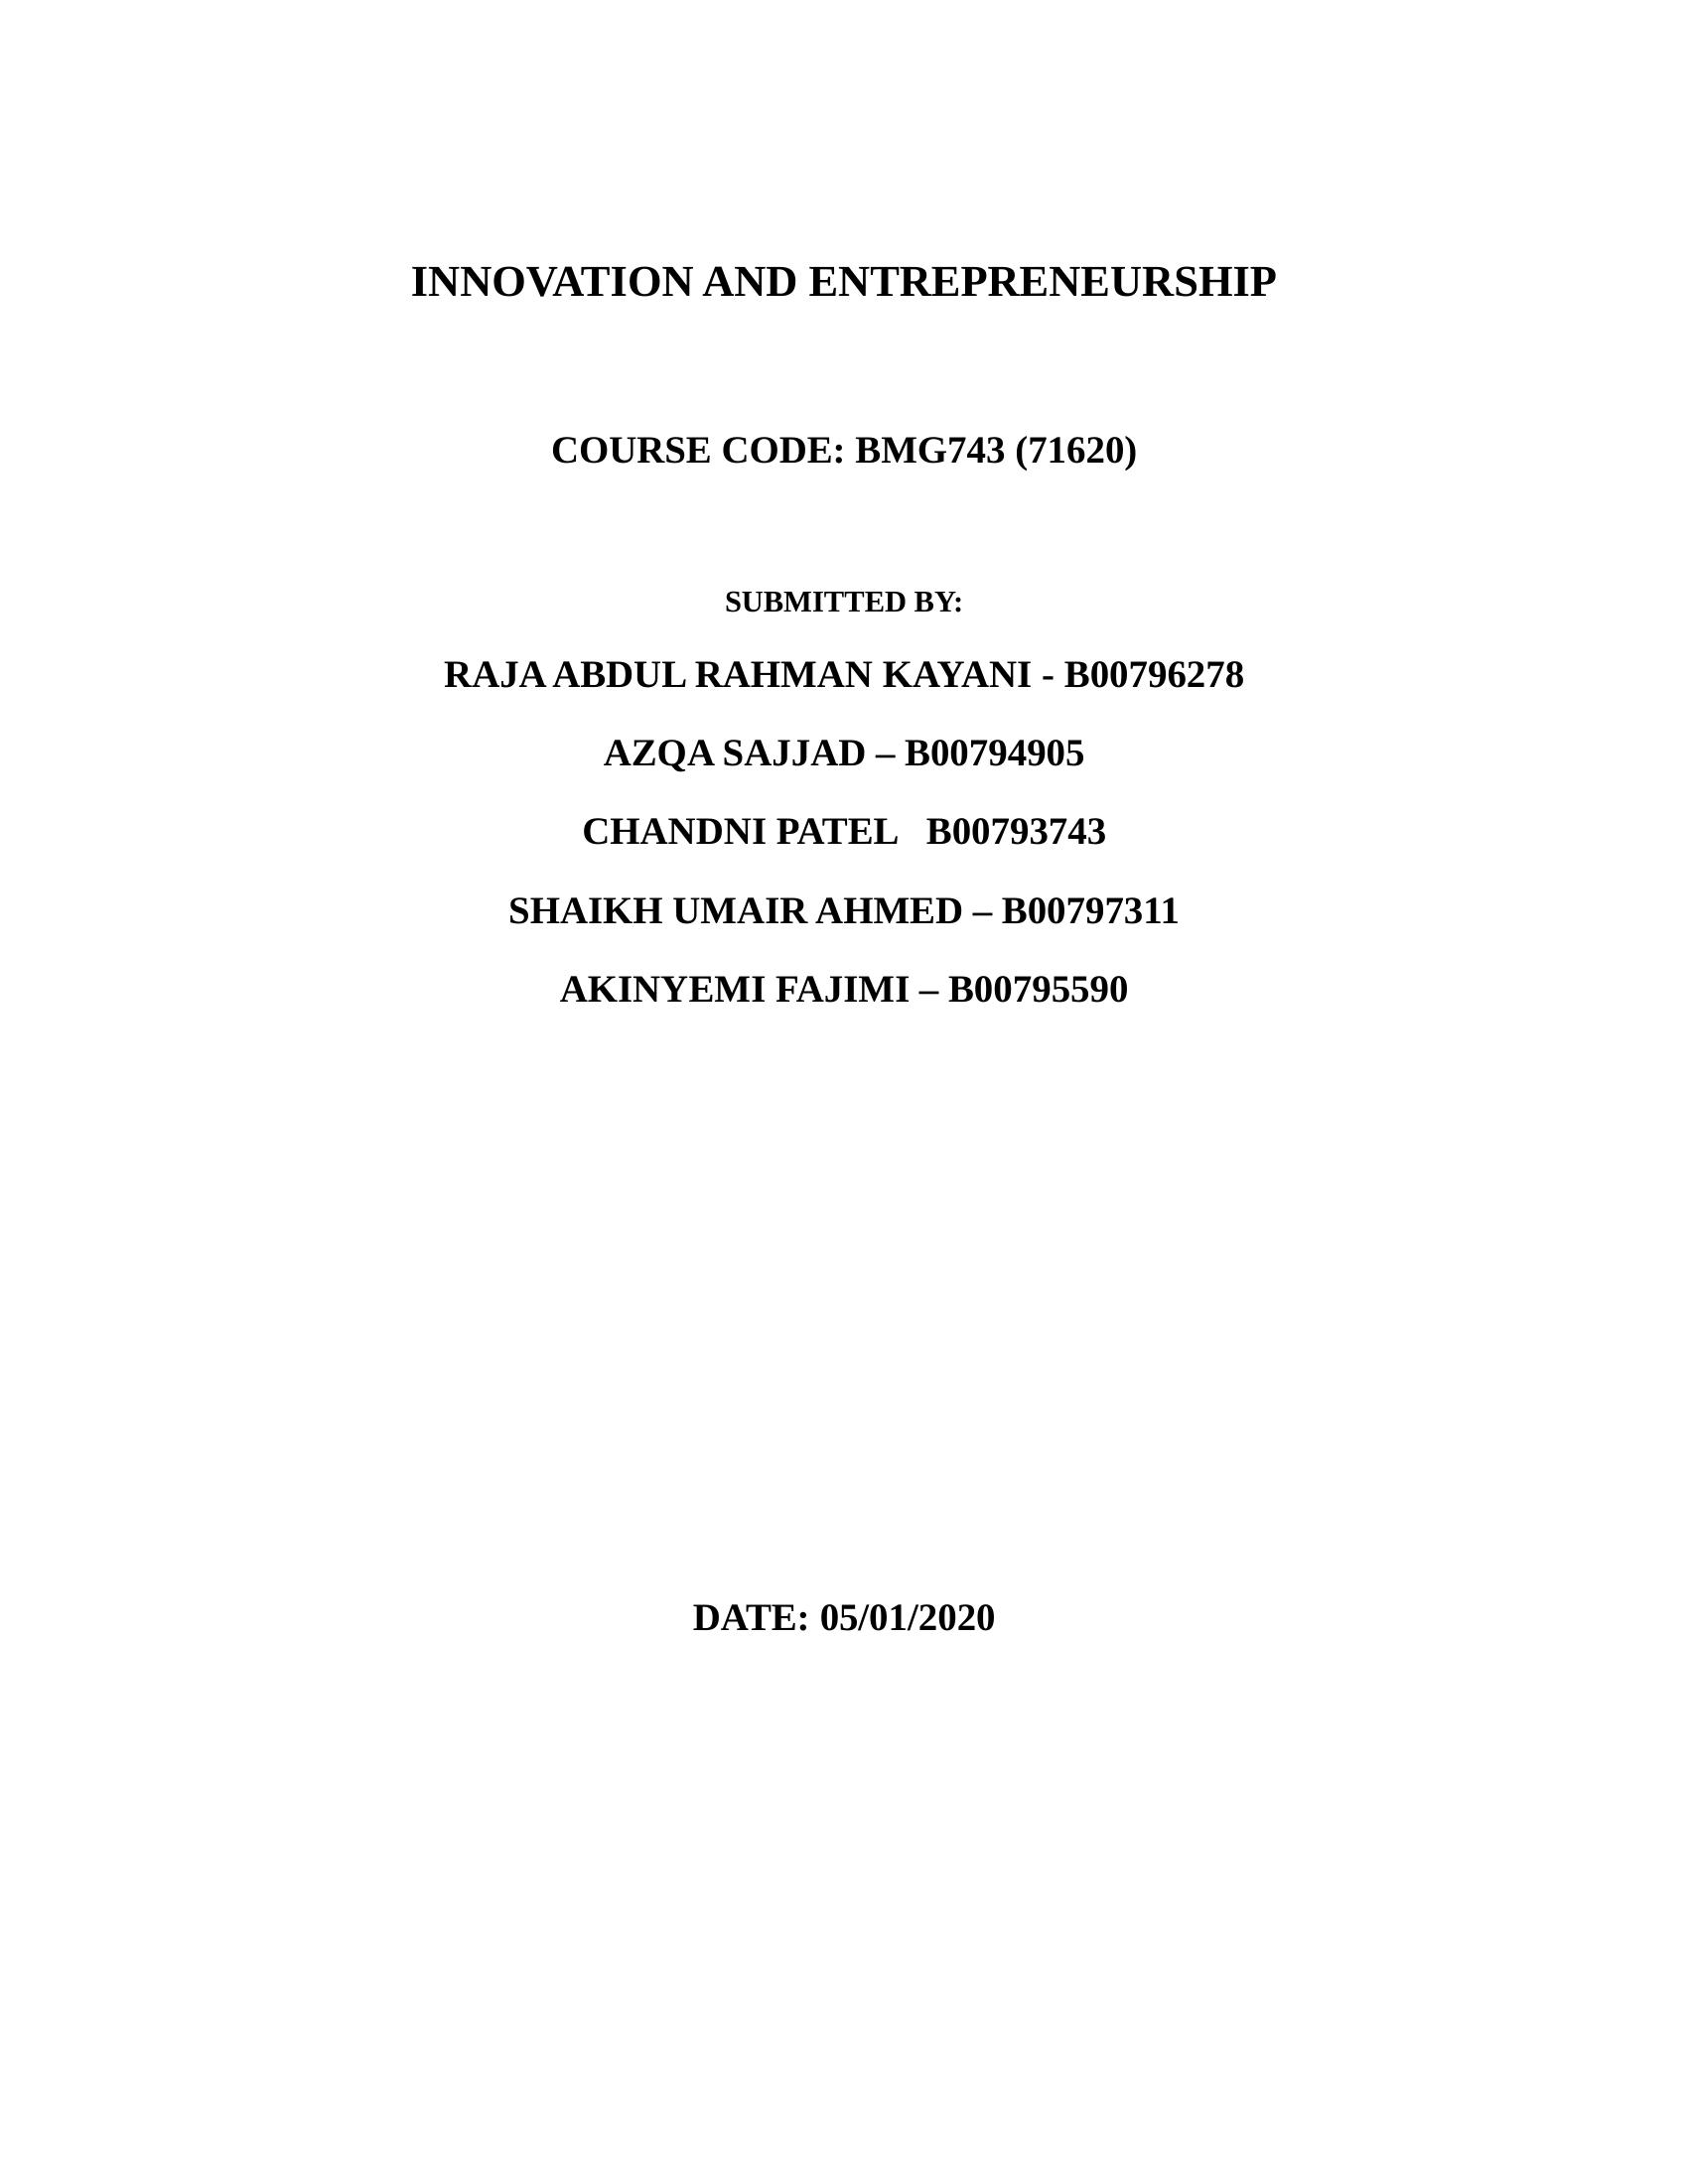 BMG743: Innovation and Entrepreneurship